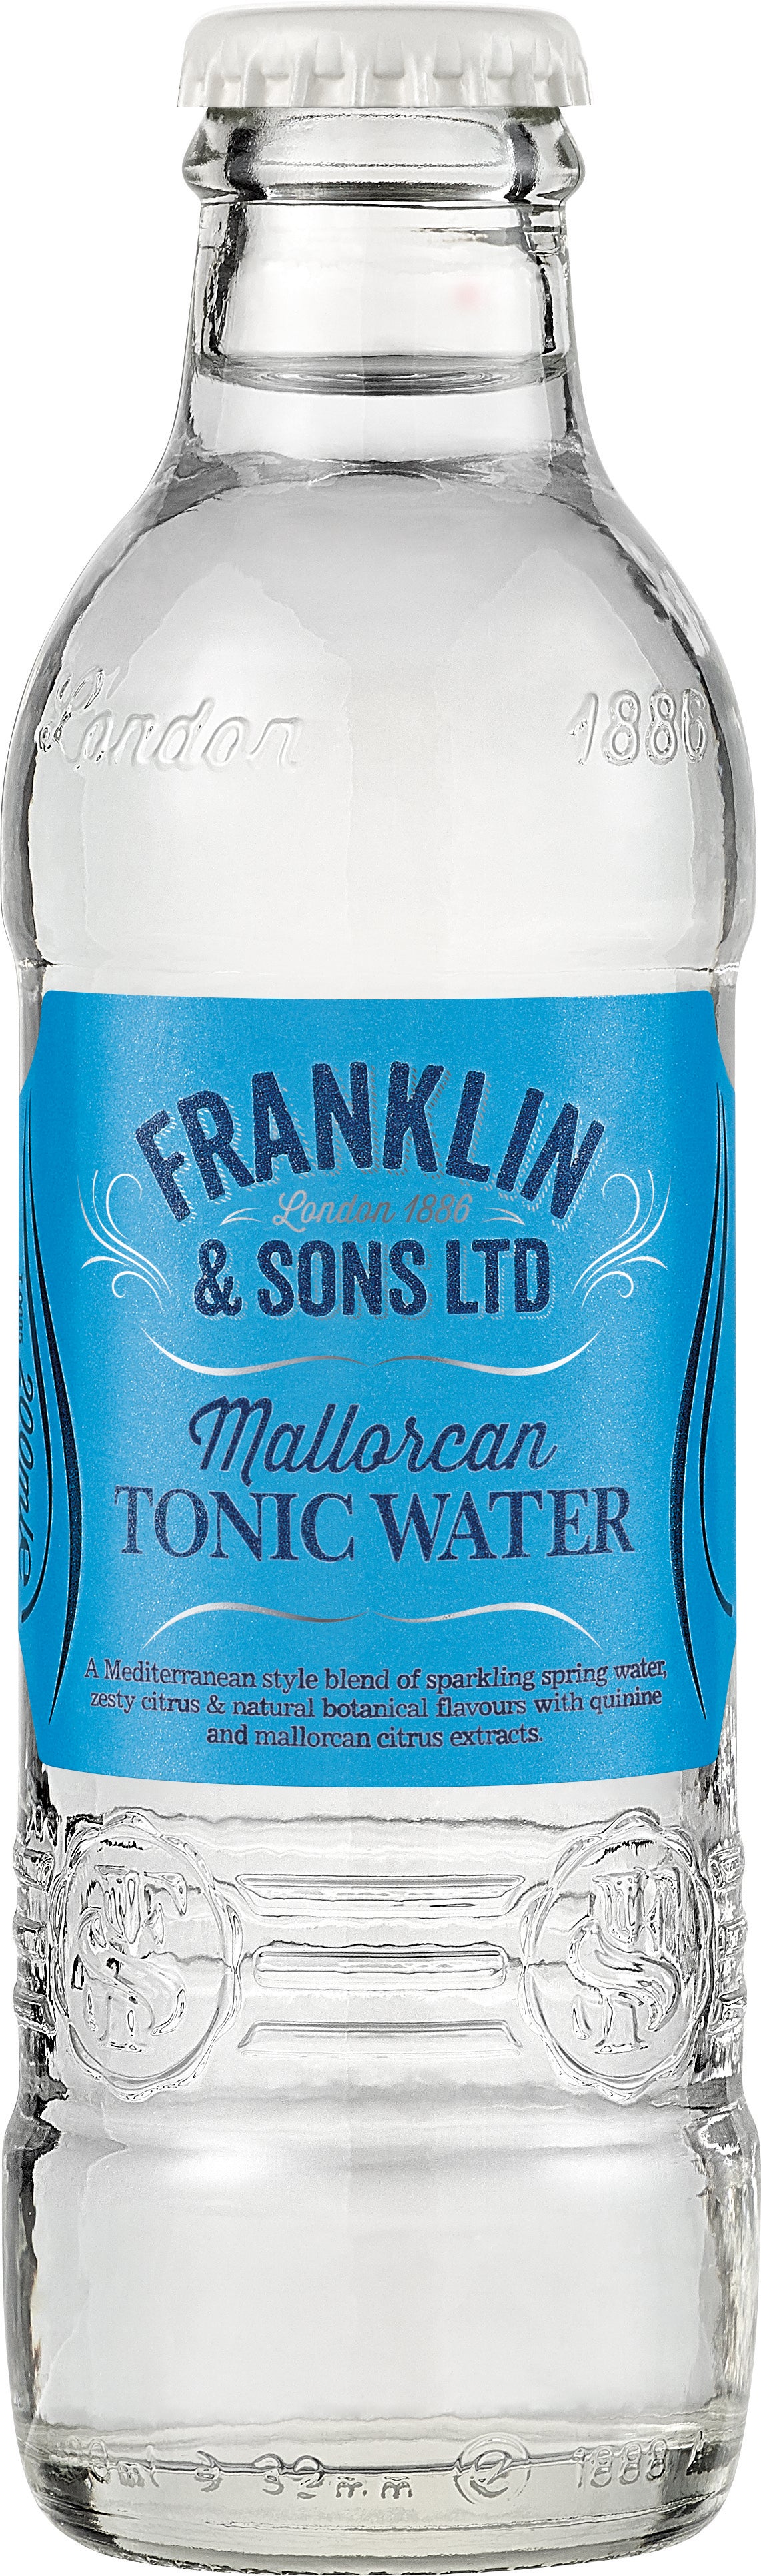 Franklin & Sons Mallorcan Tonic Water (24 x 200ml bottles)